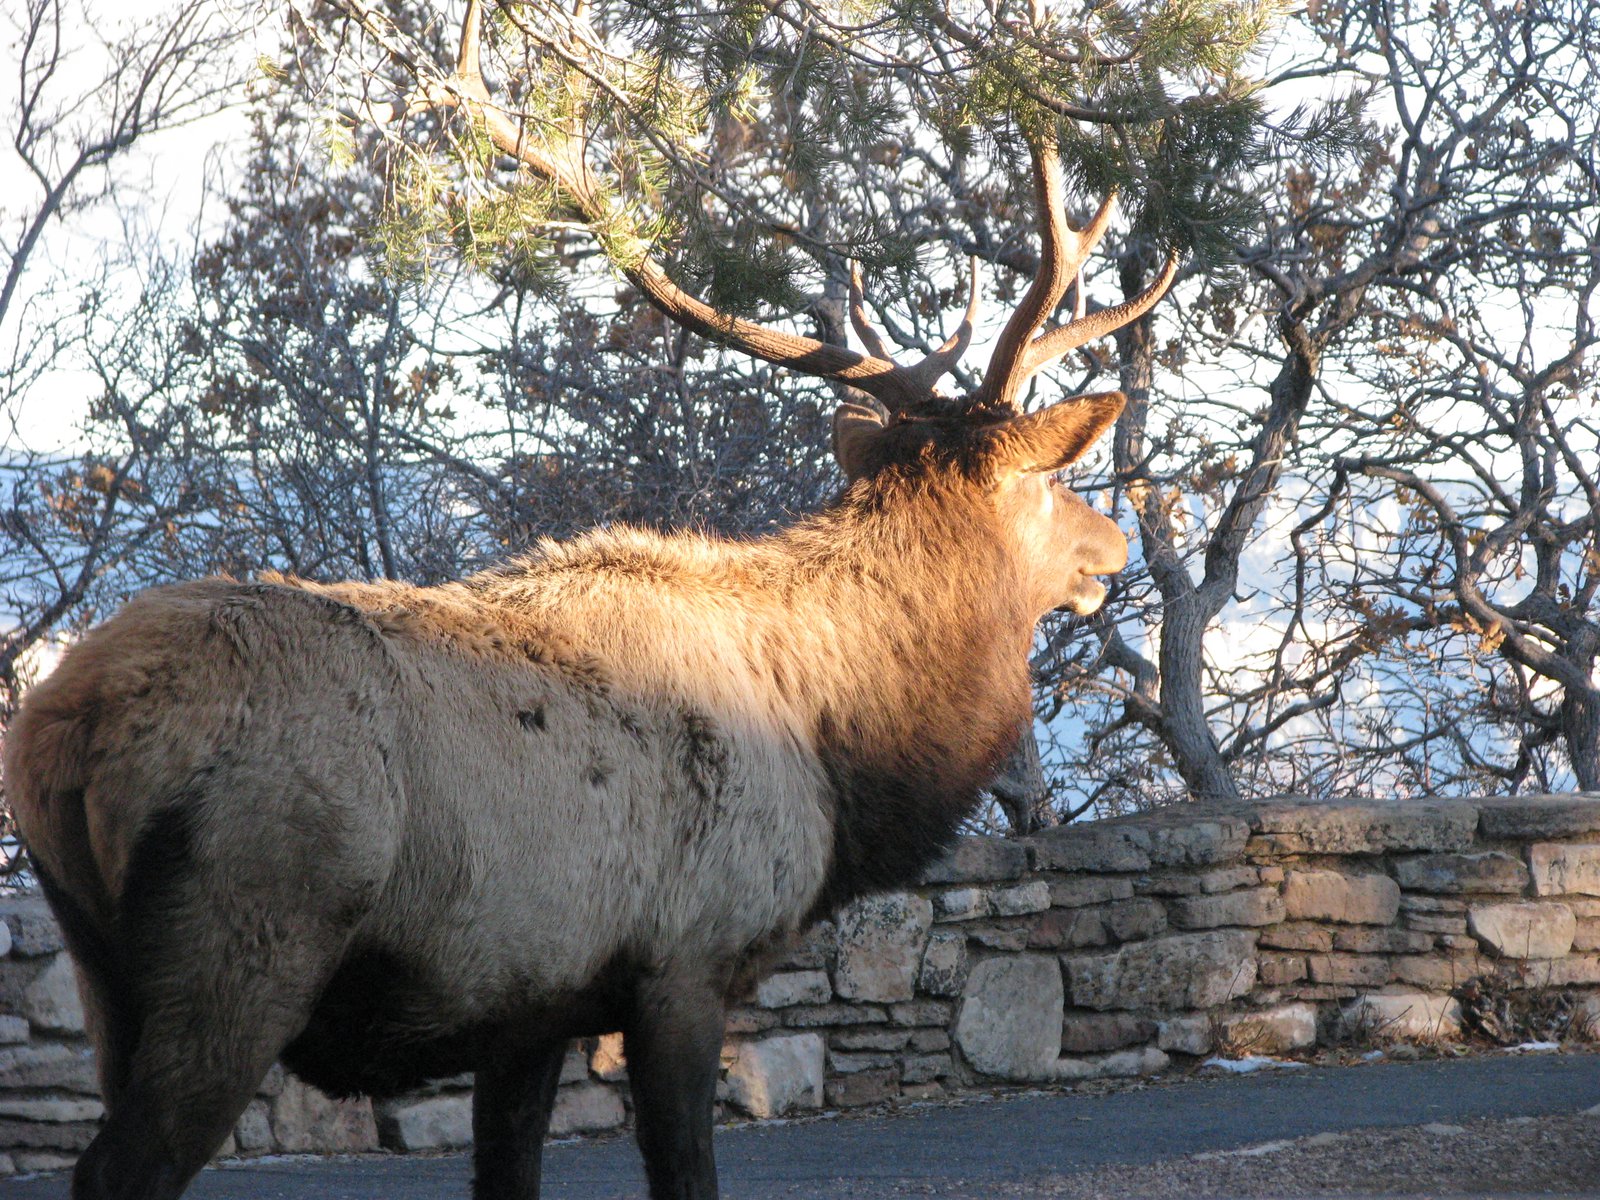 Steve the Elk